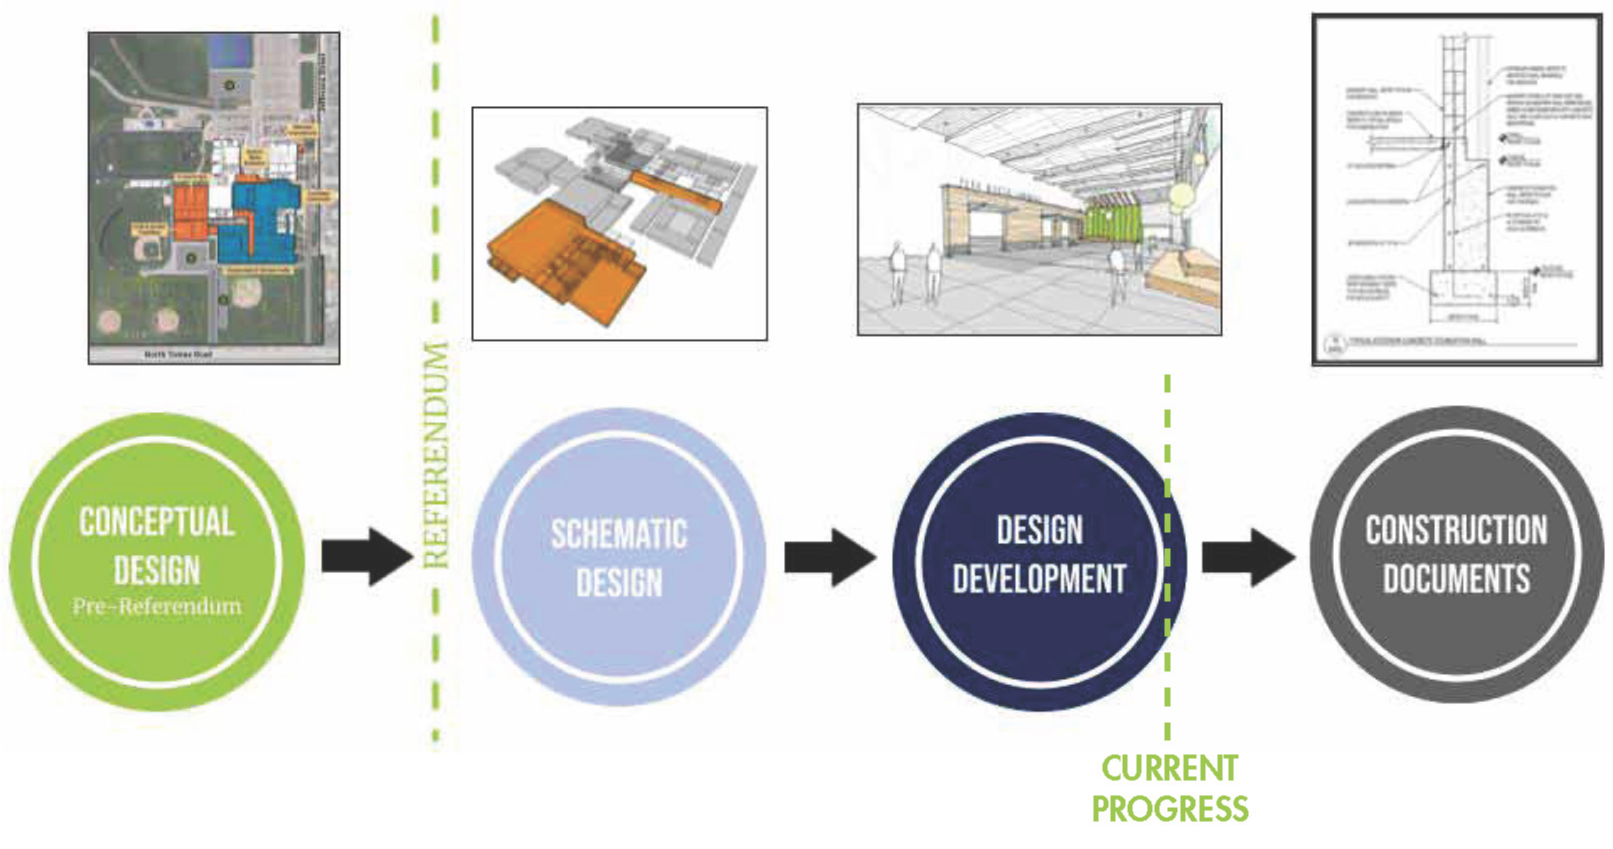 graphic of understanding the design process - conceptual design, schematic design, design development, construction documents 